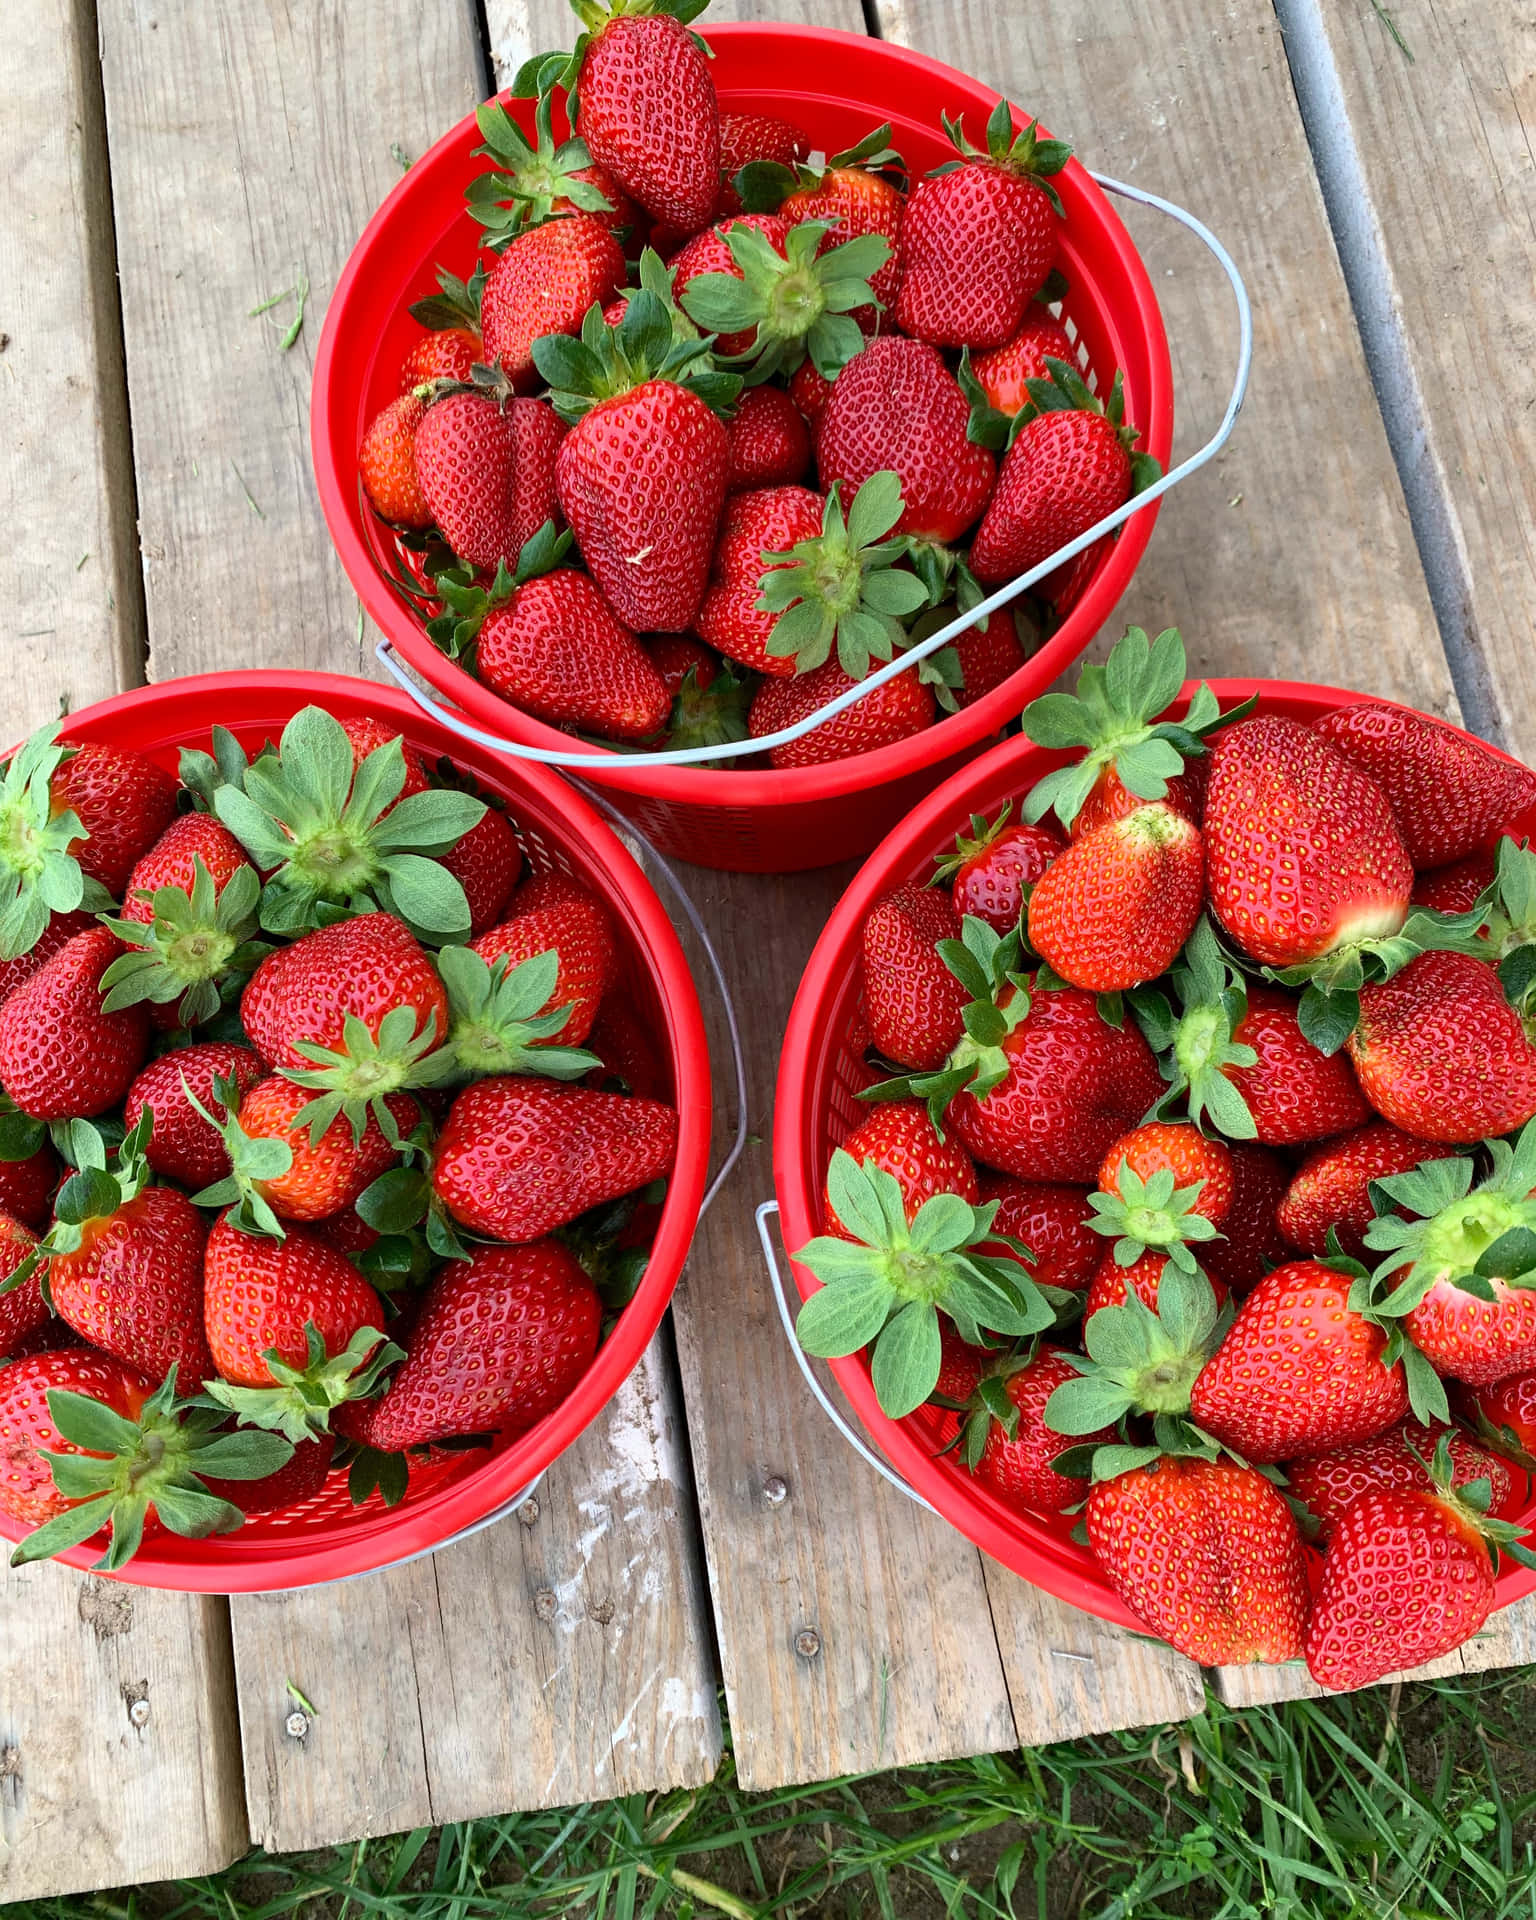 The sweetness of summertime - Enjoying a freshly picked Strawberry